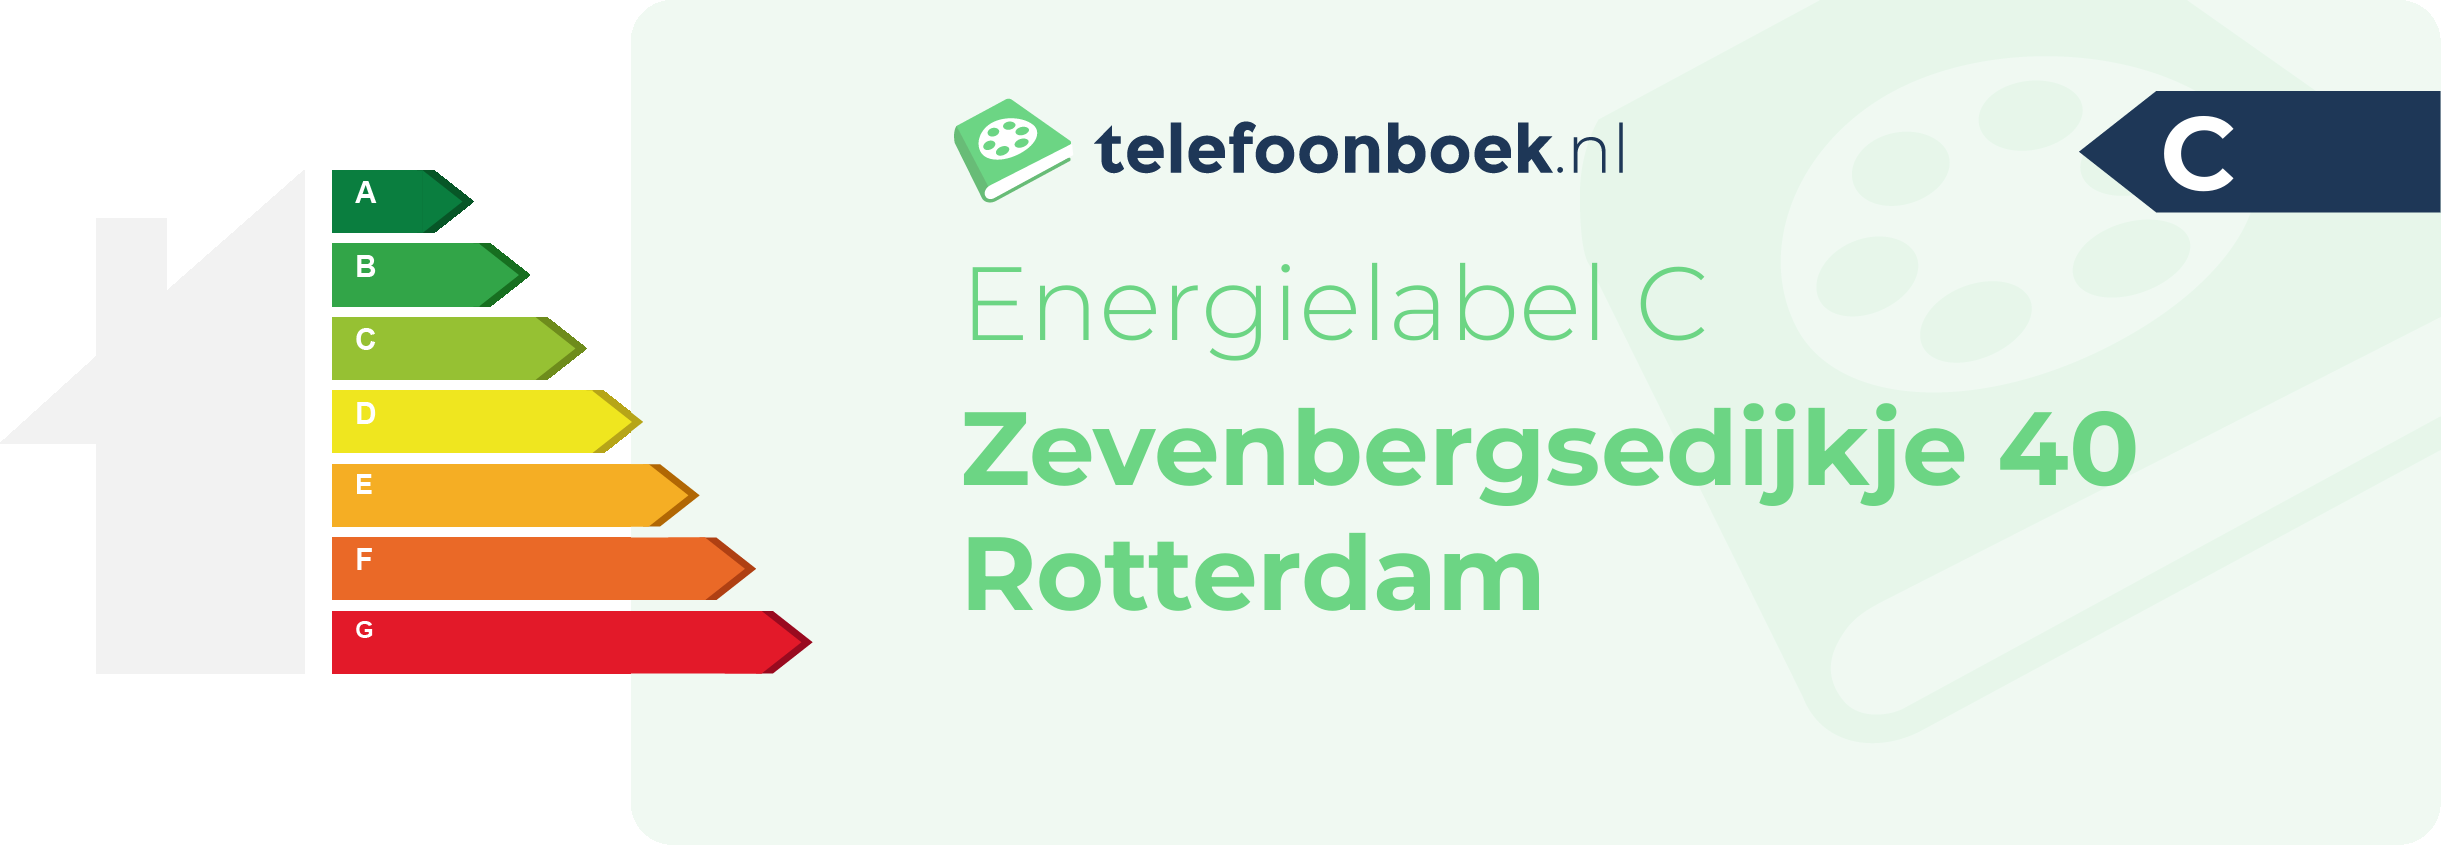 Energielabel Zevenbergsedijkje 40 Rotterdam